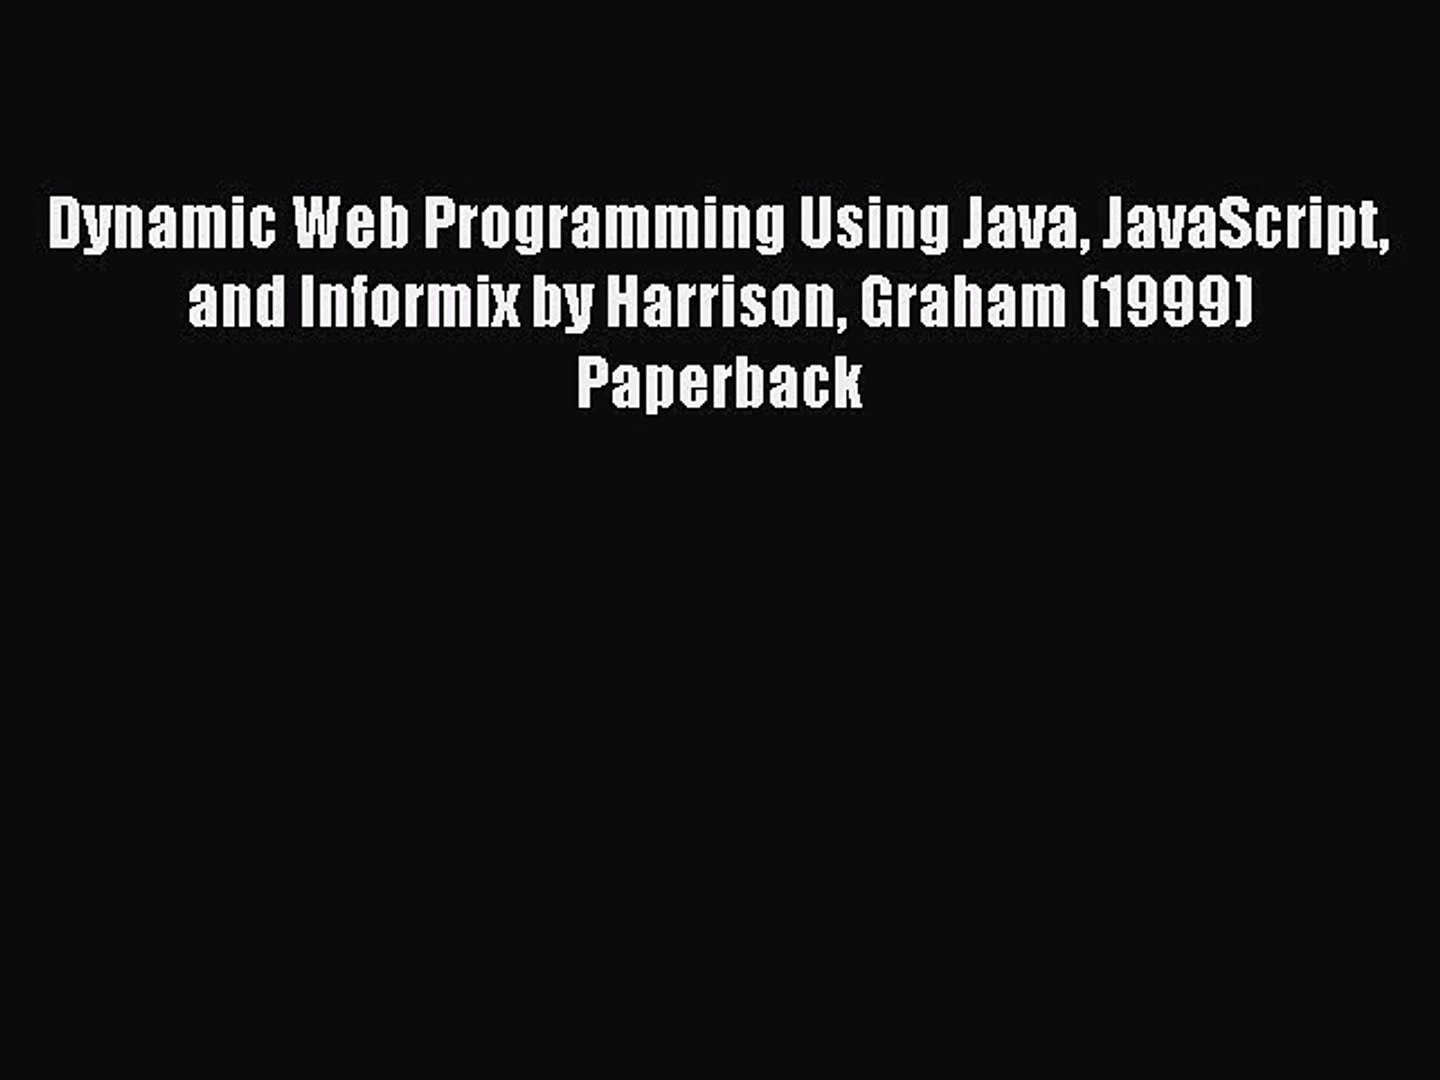 [PDF Download] Dynamic Web Programming Using Java JavaScript and Informix by Harrison Graham